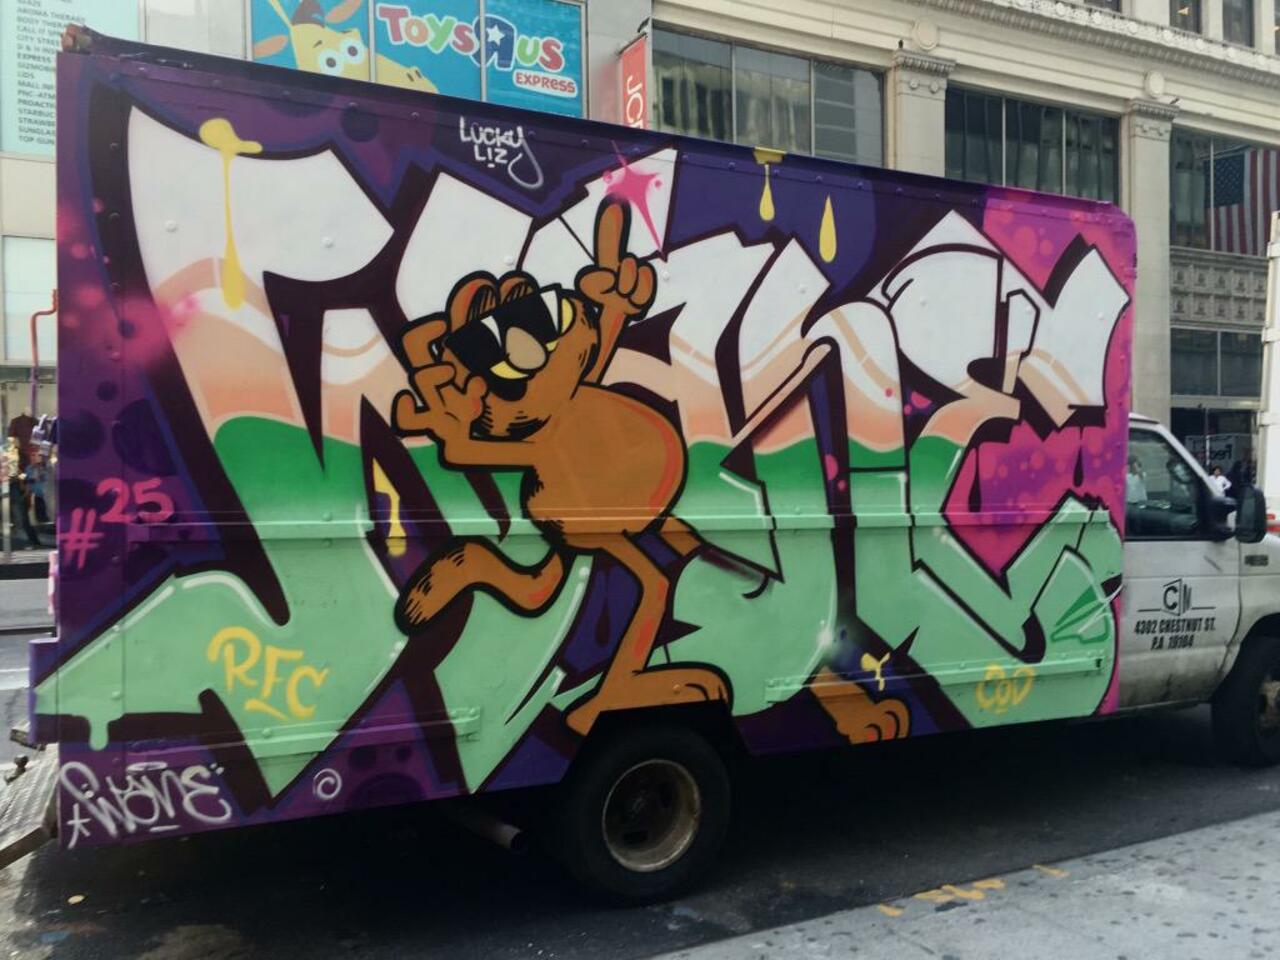 Wane COD killing a truck in the city #wane #cod #streetart #Nikon #graffiti #garfield #colorful #nyc #art #urban http://t.co/AYNQ1UNJ6z